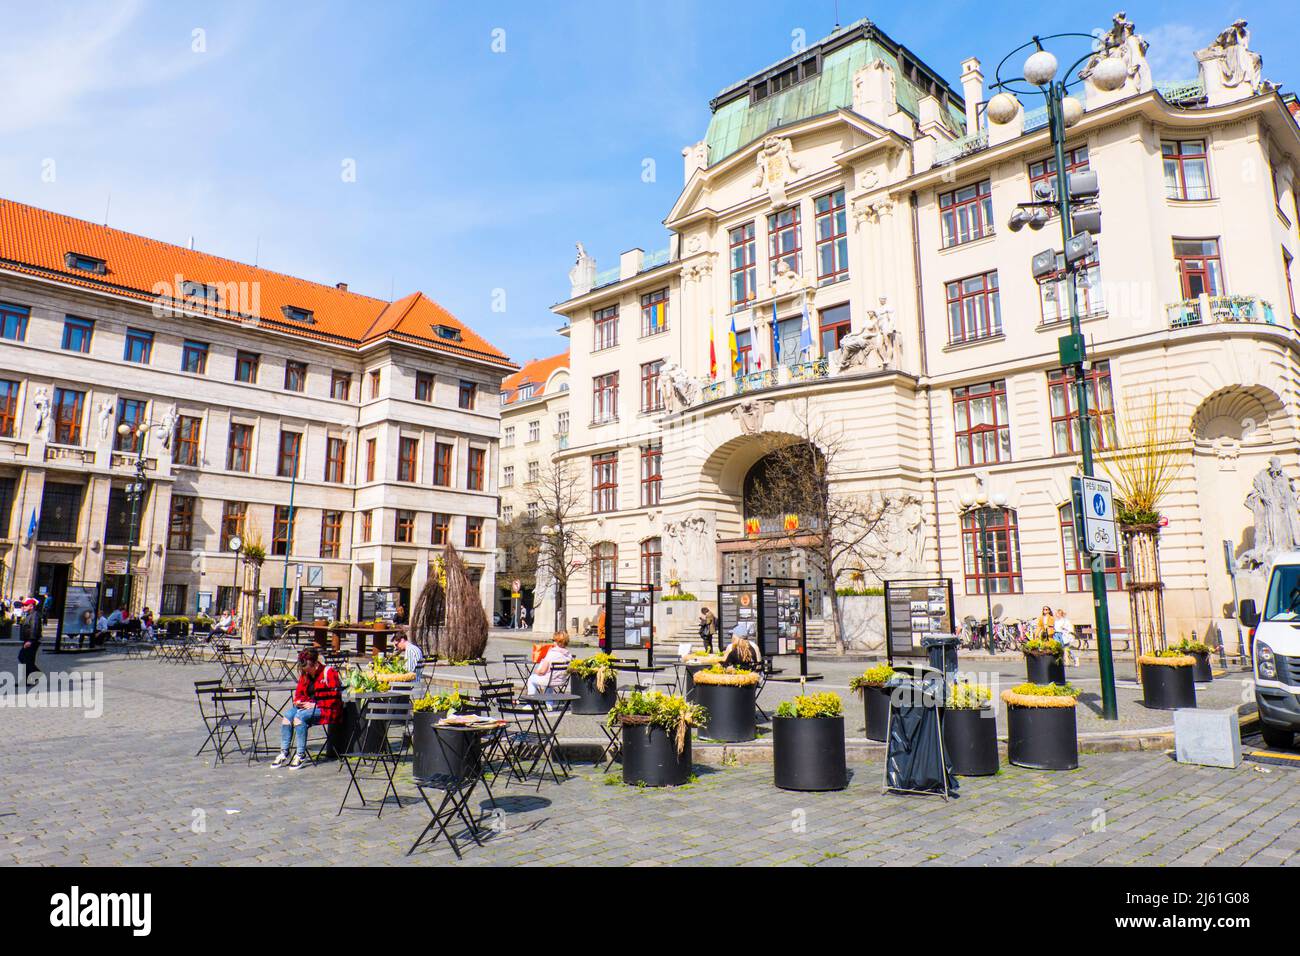 Marianske namesti, città vecchia, Praga, Repubblica Ceca Foto Stock